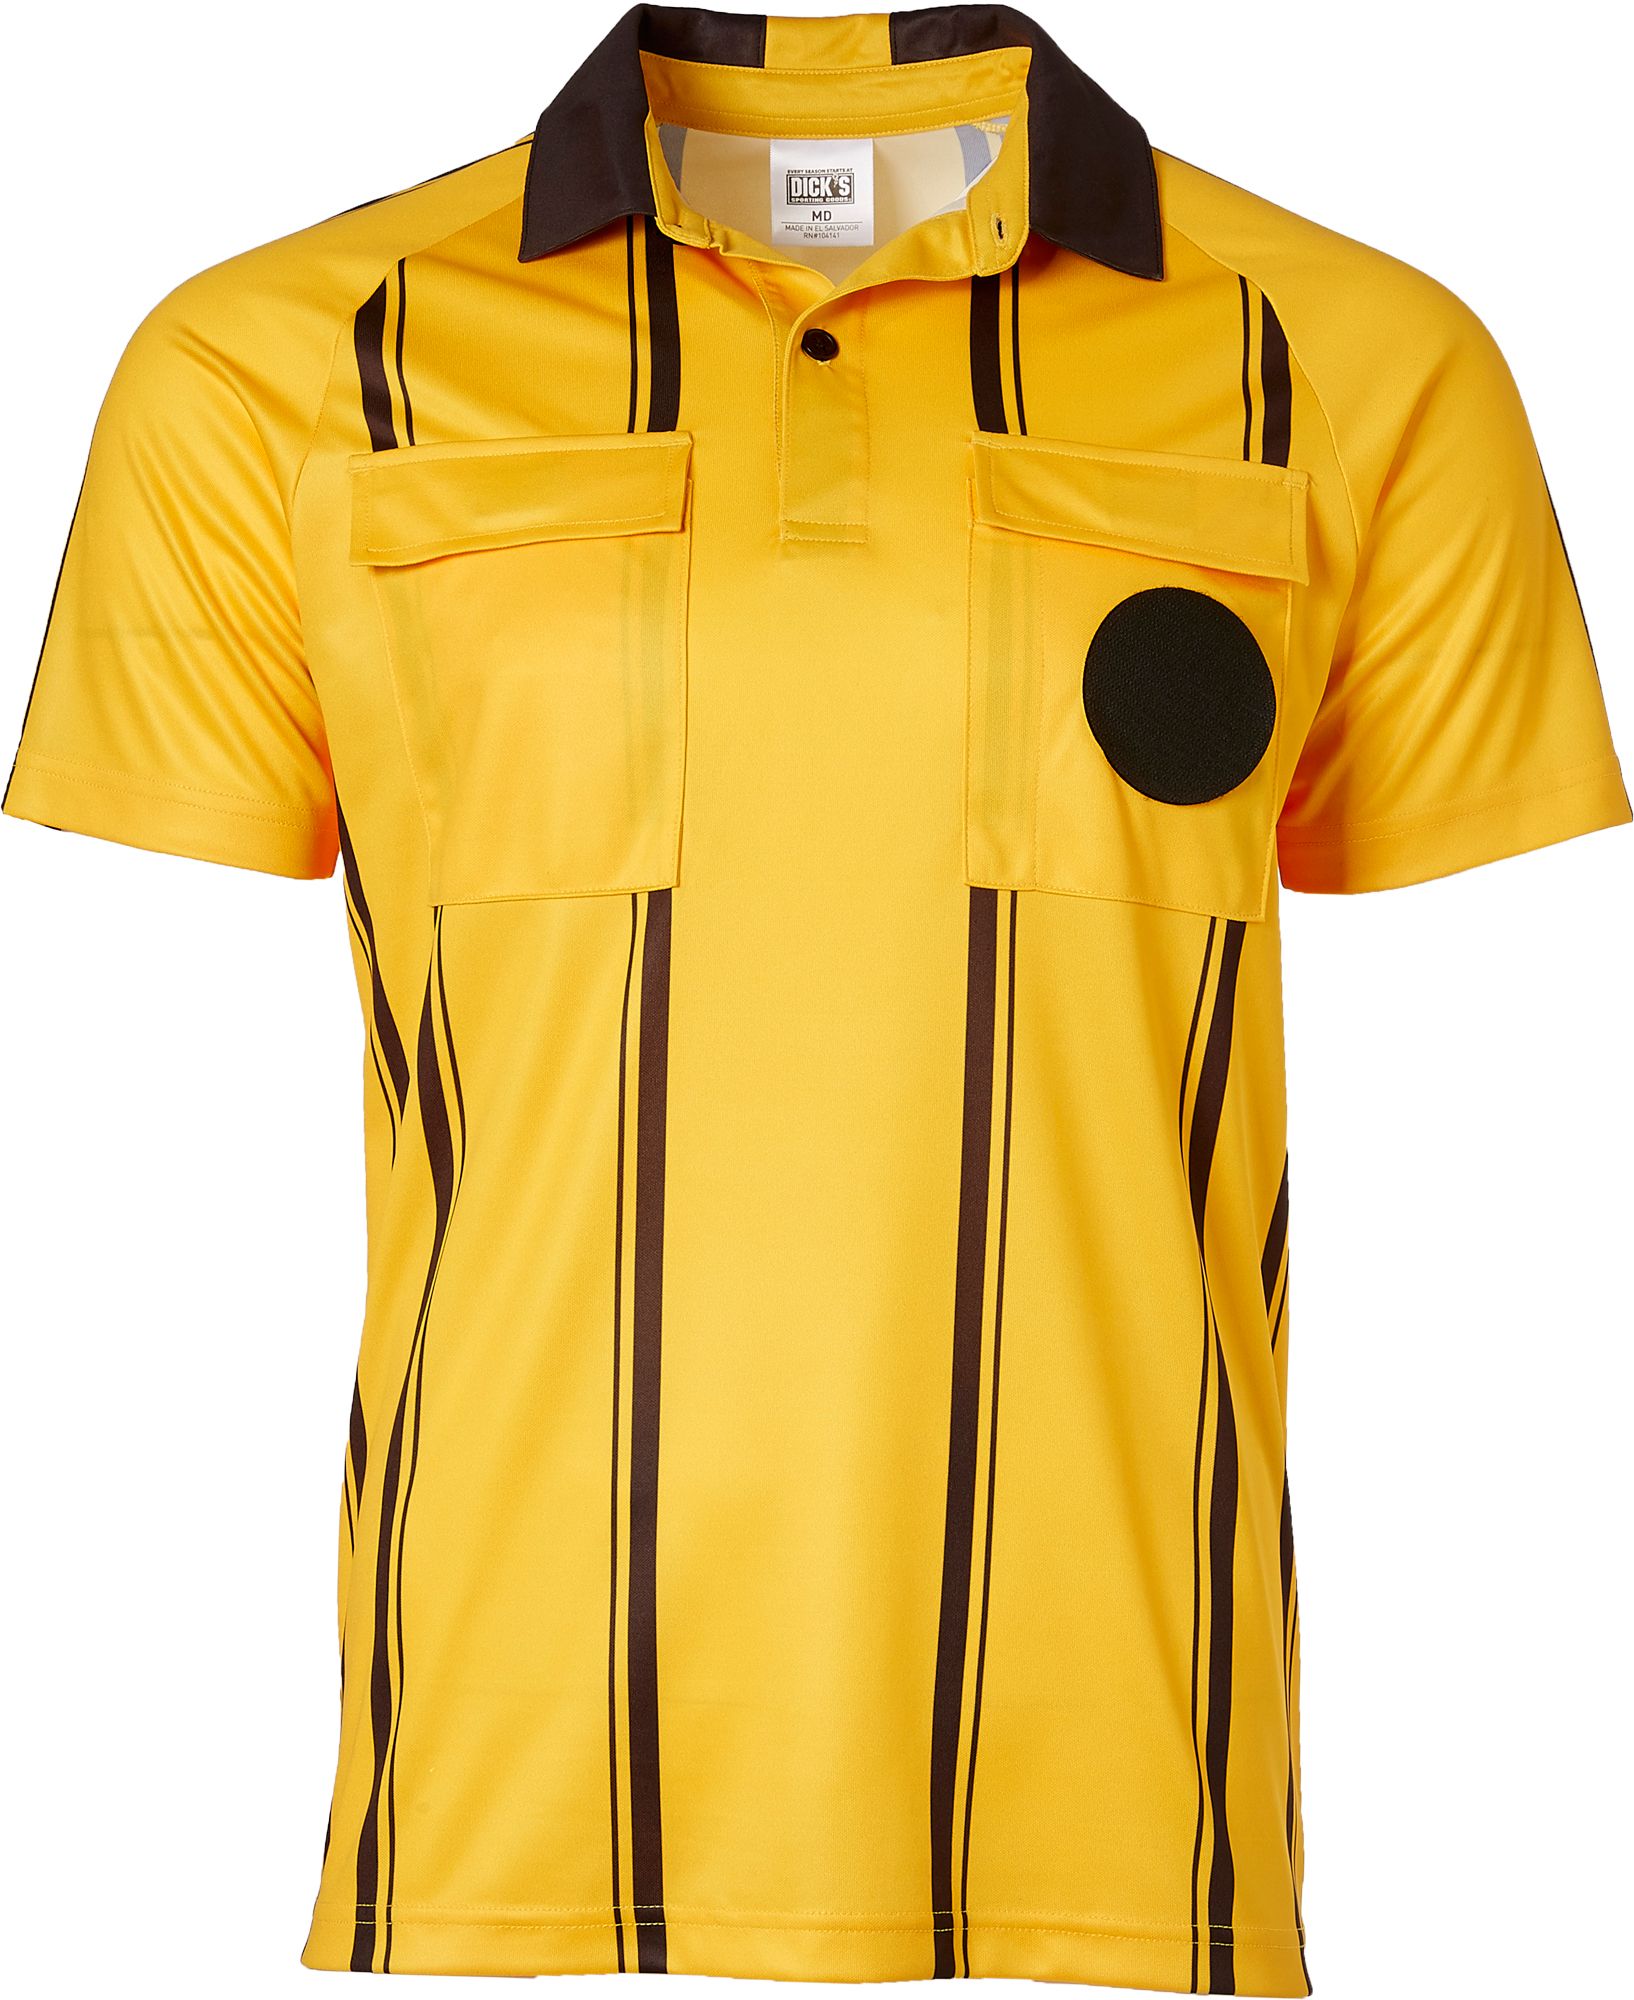 yellow soccer referee jersey